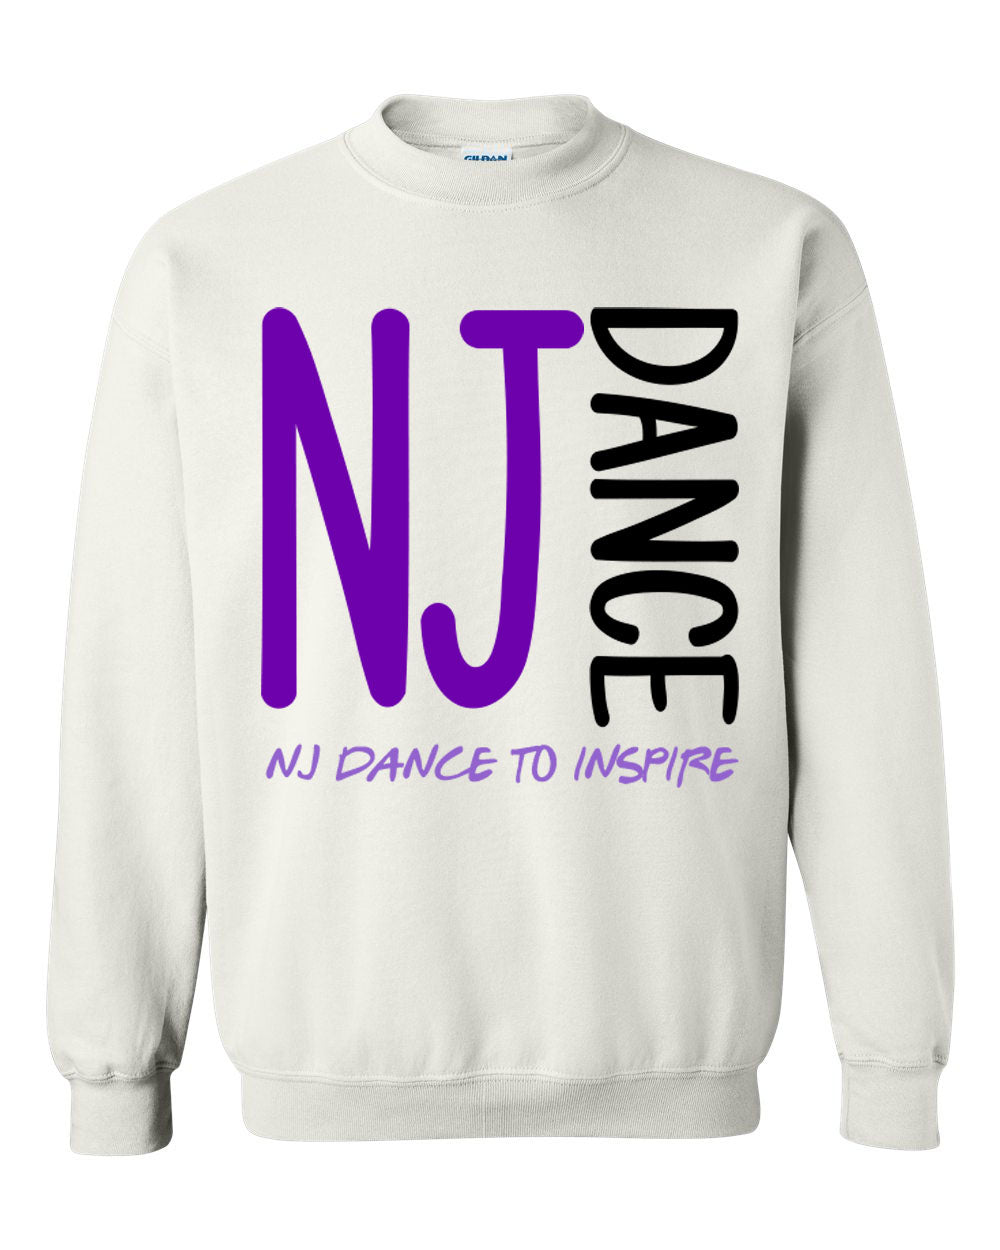 NJ Dance Design 3 non hooded sweatshirt